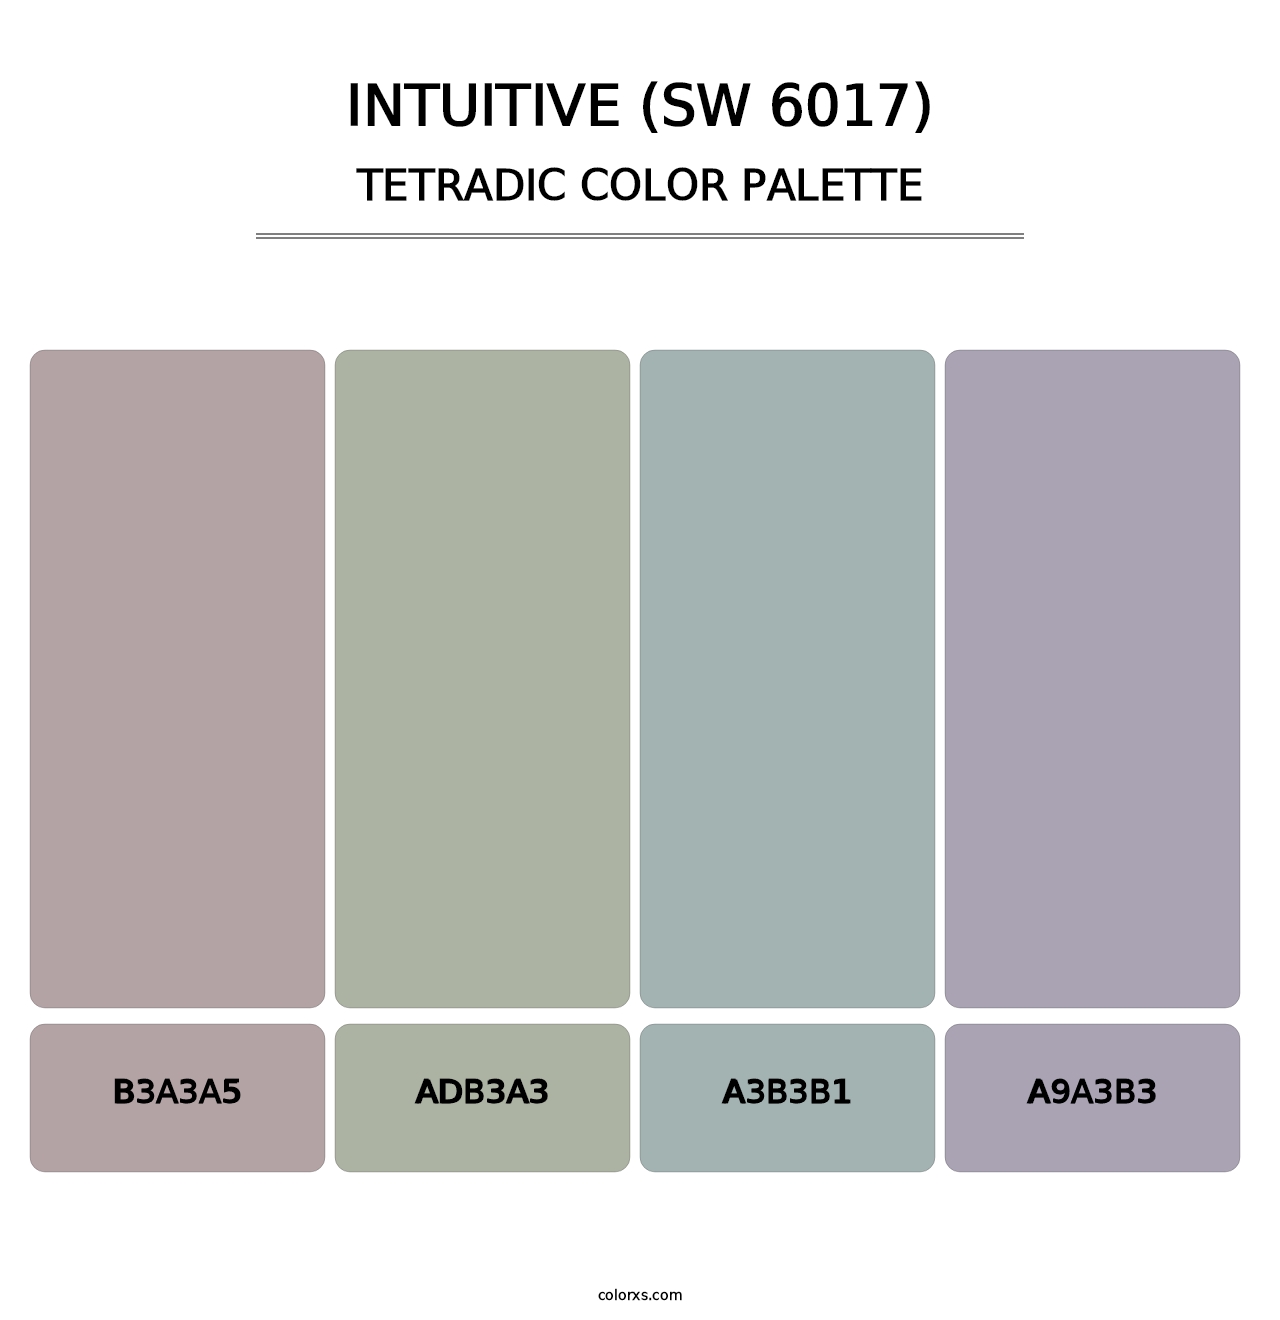 Intuitive (SW 6017) - Tetradic Color Palette